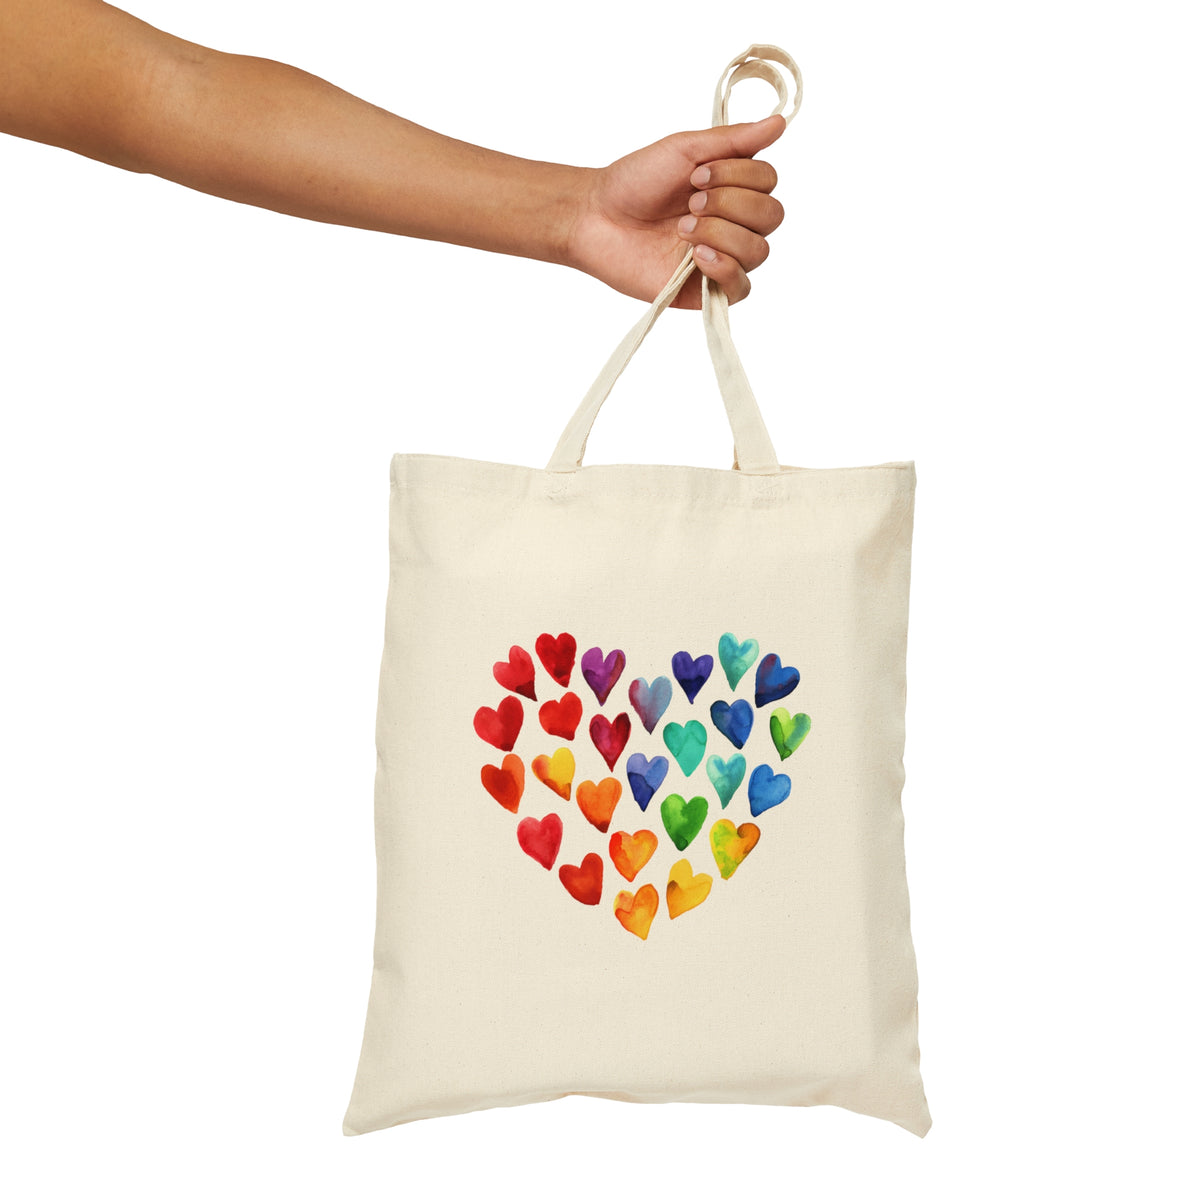 Watercolor Art Hearts Love Tote Bag | Valentine's Day Gift Bag | Cotton Canvas Tote Bag